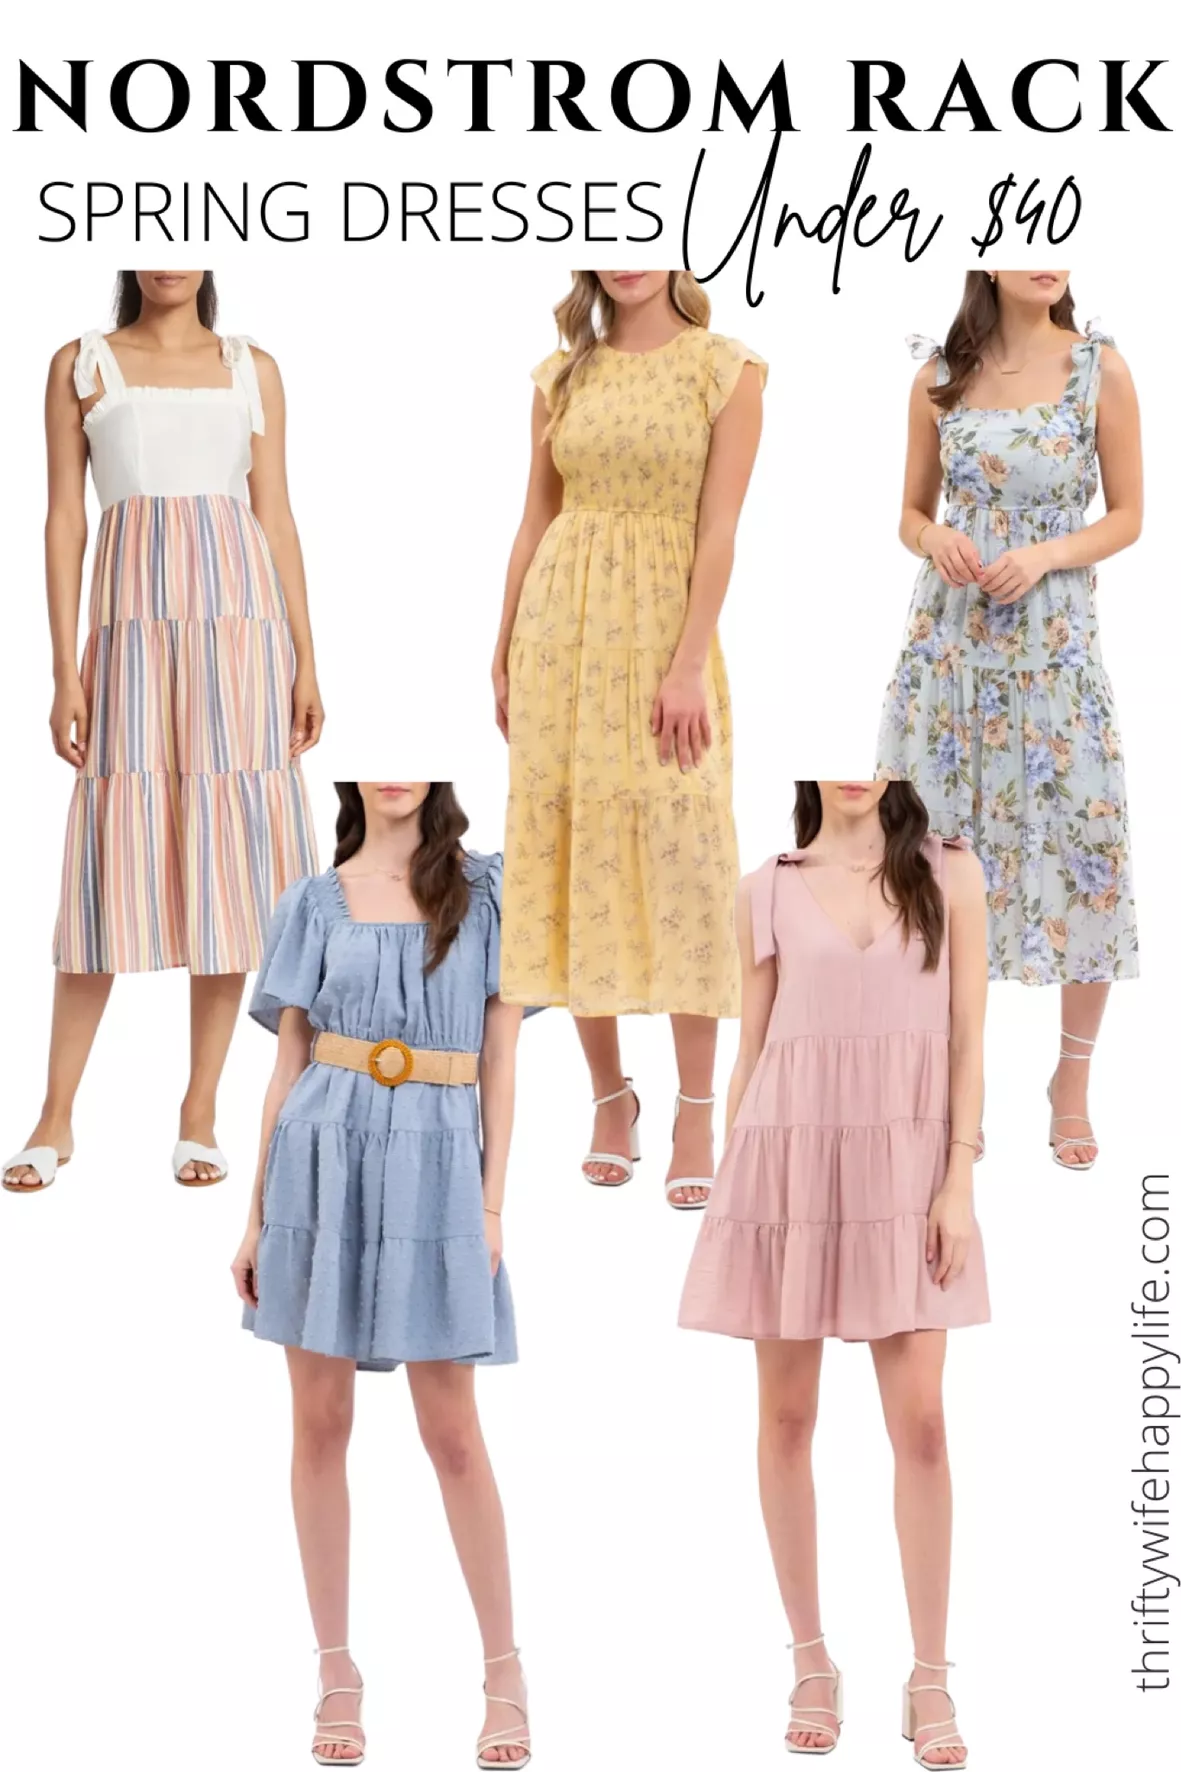 Hundreds of Spring Dresses Are on Sale at Nordstrom Rack